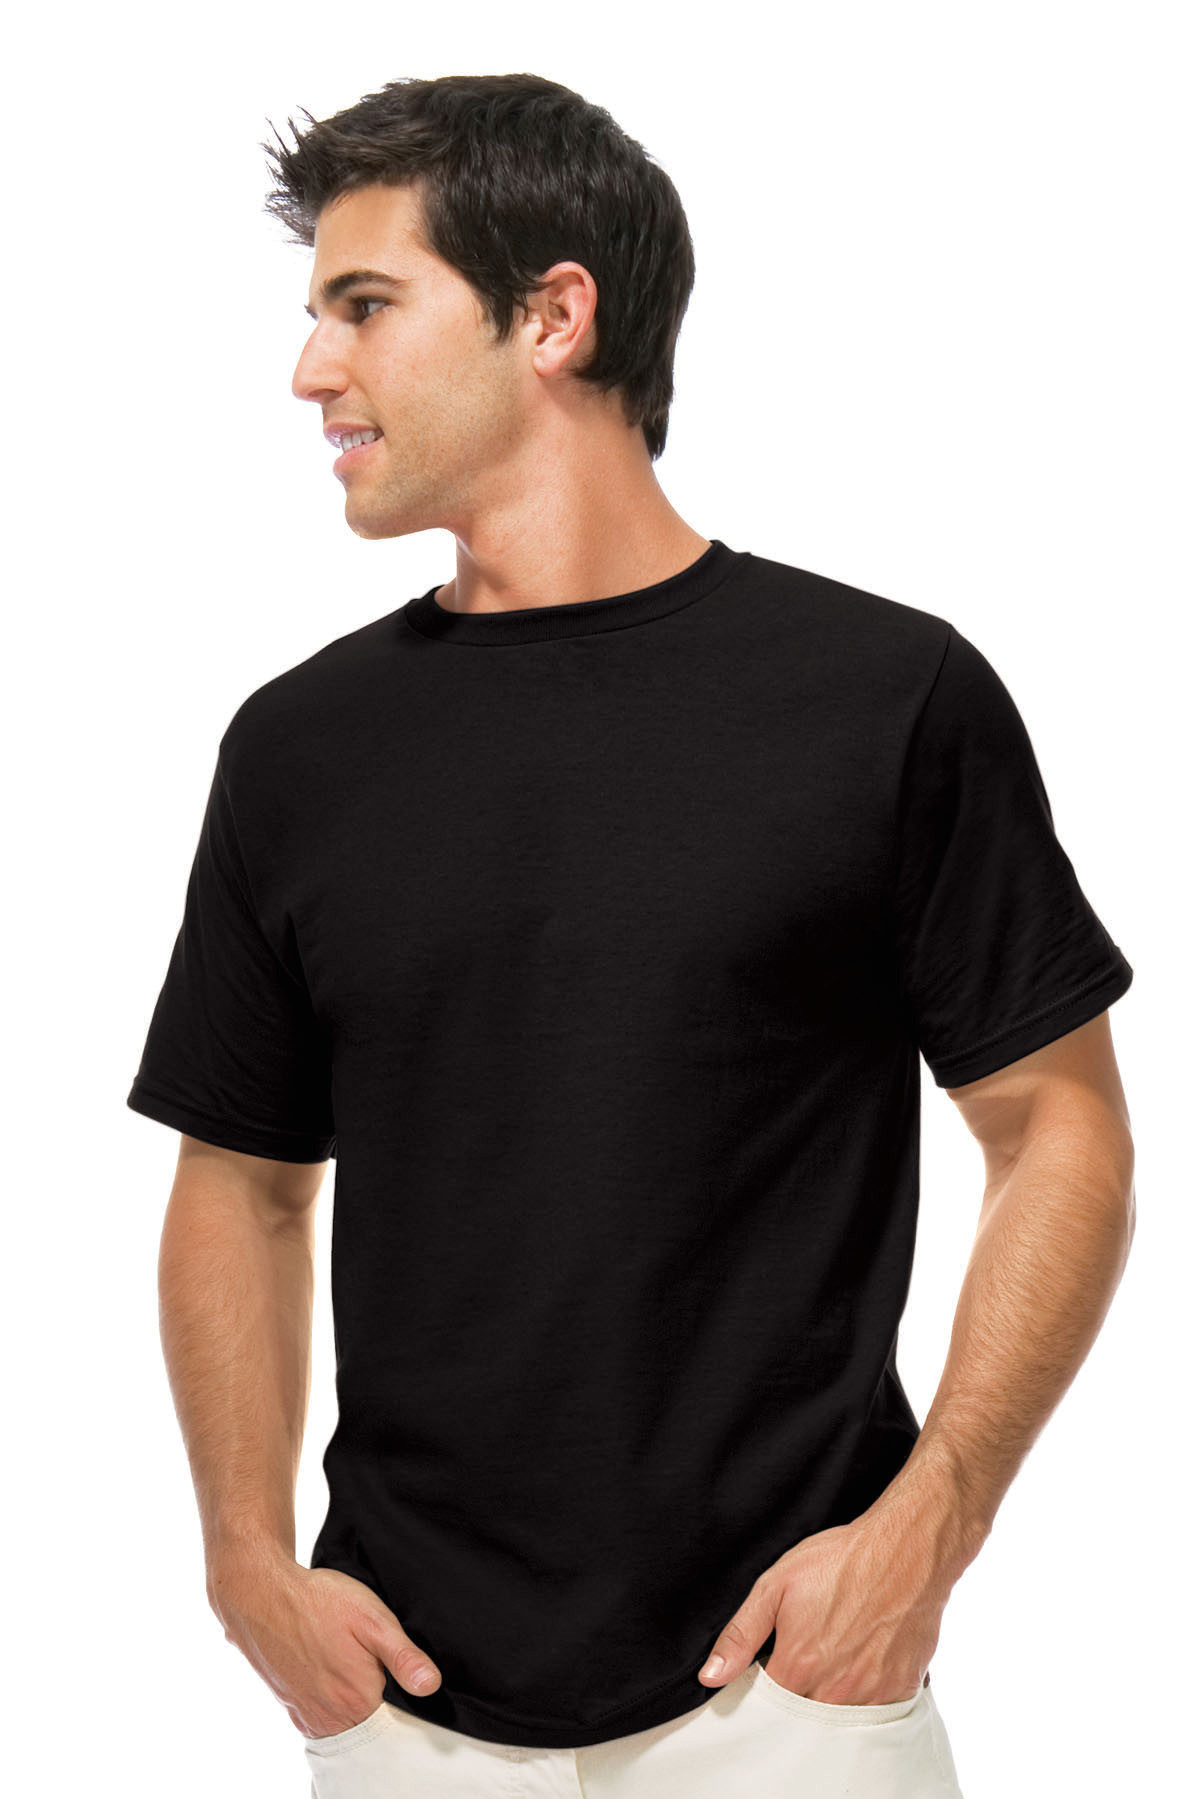 post t shirt model template 119991